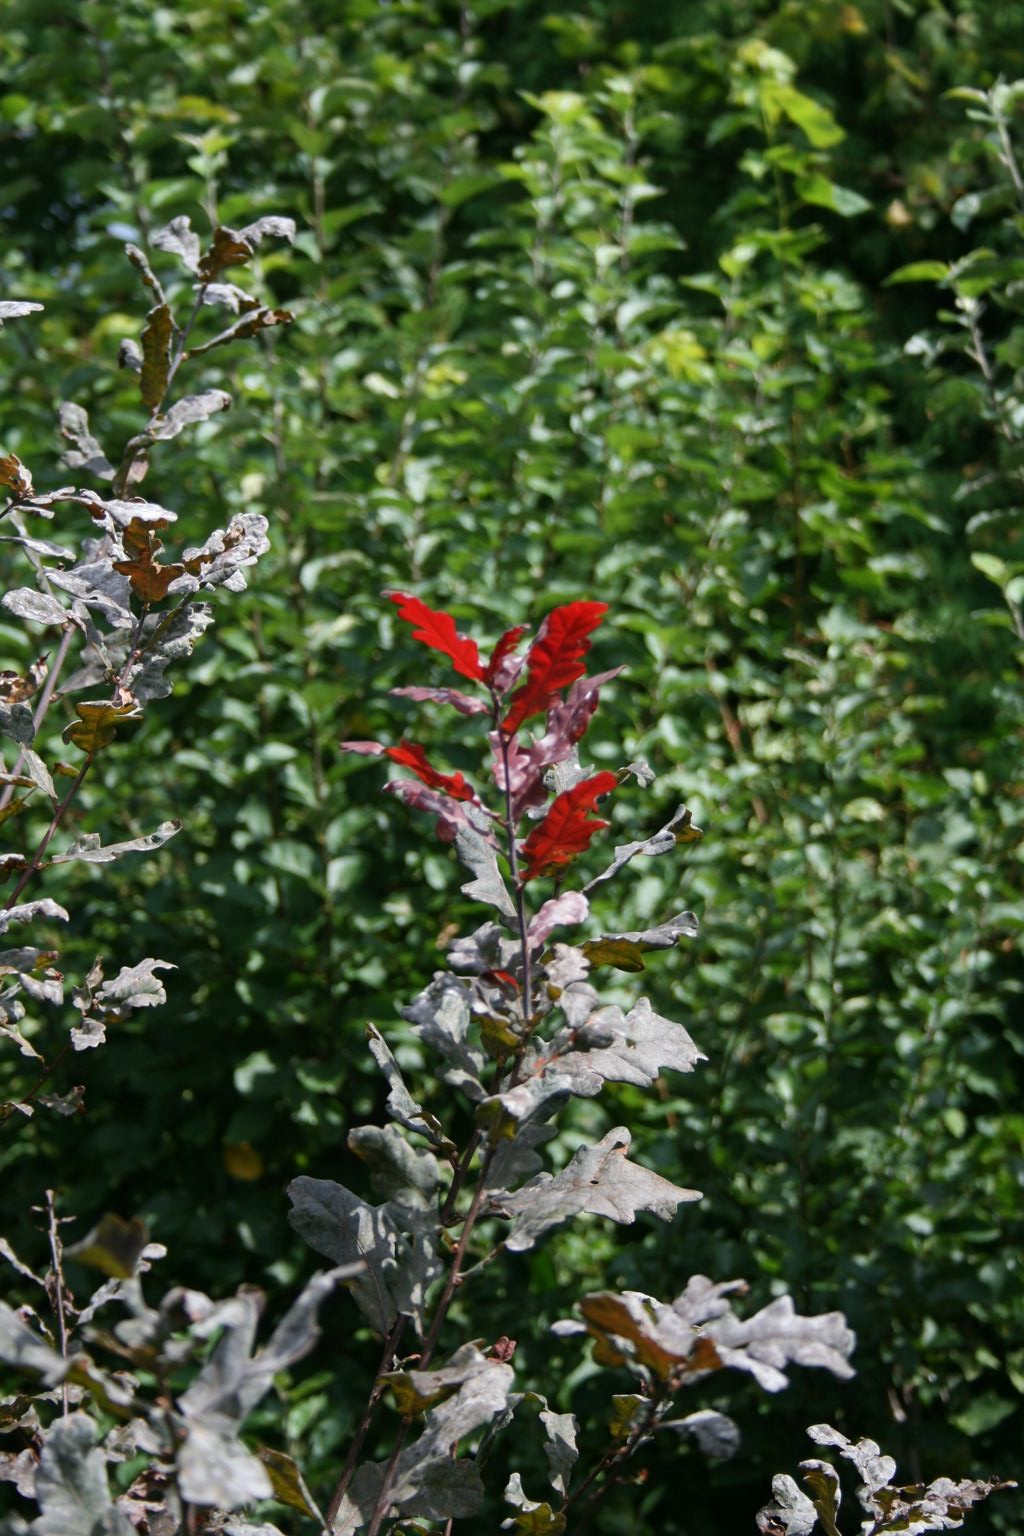 Dąb bezszypułkowy "Purpurea" / Quercus petraea "Purpurea"